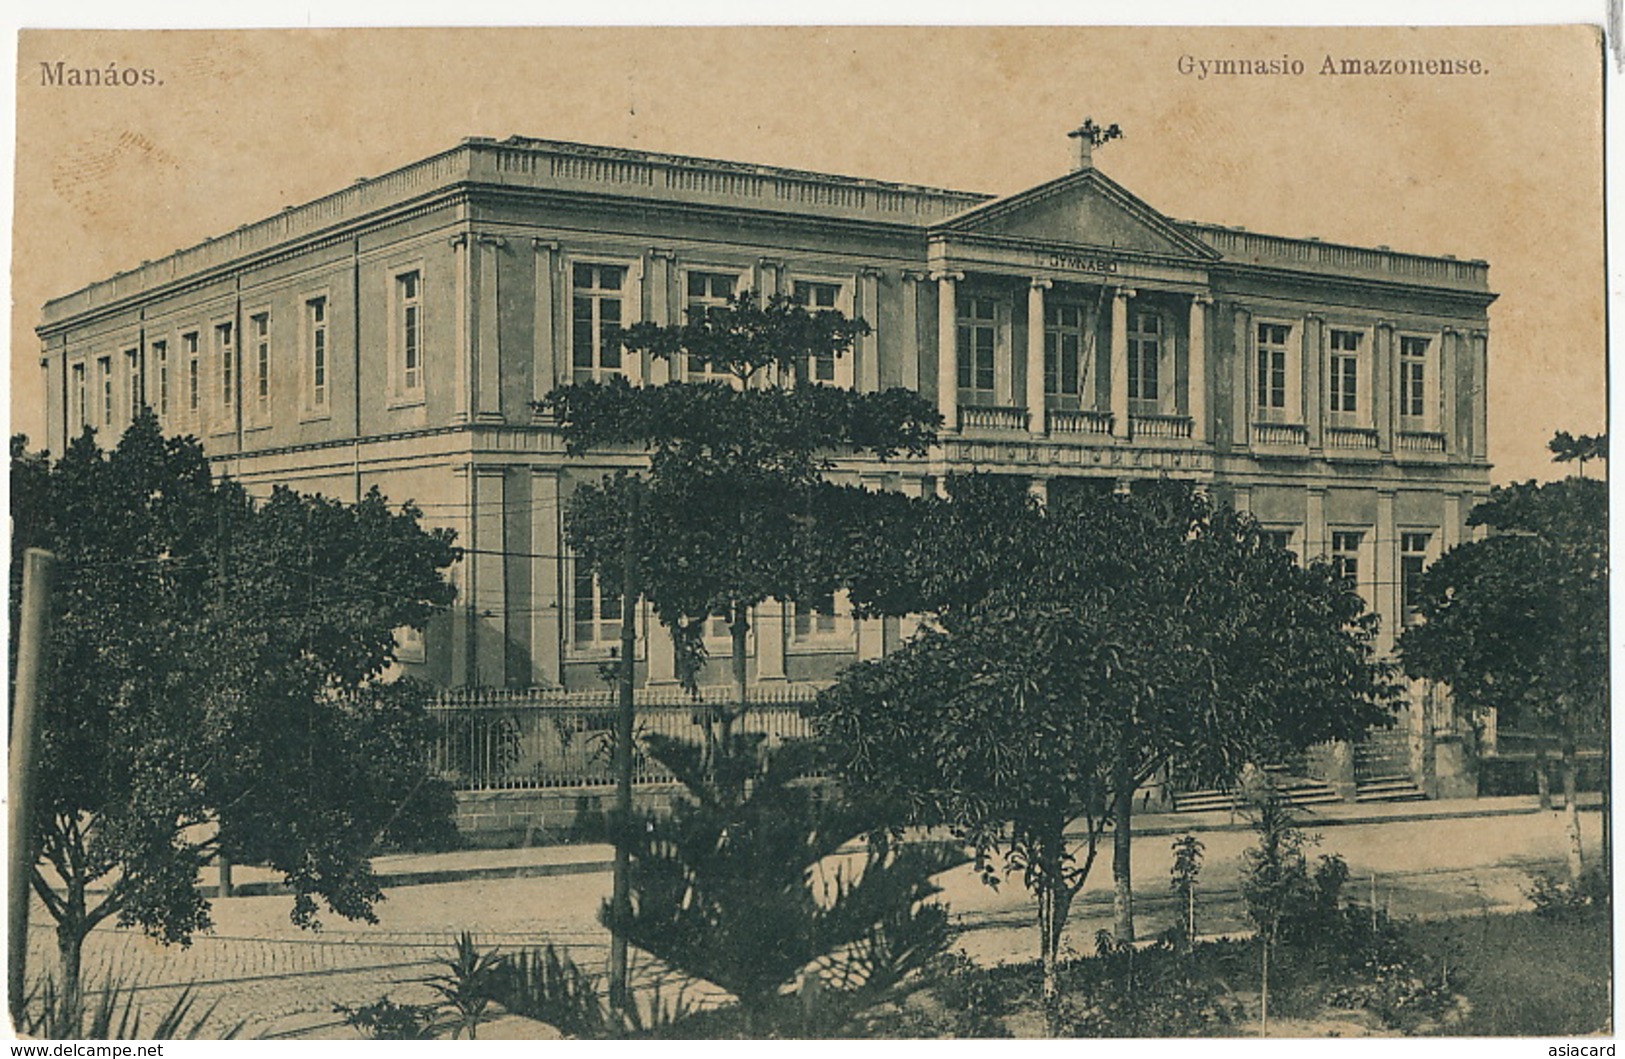 Manaos Gymnasio Amazonense  P. Used To Cuba 1907 Deltiology Club CCC 4048 - Manaus